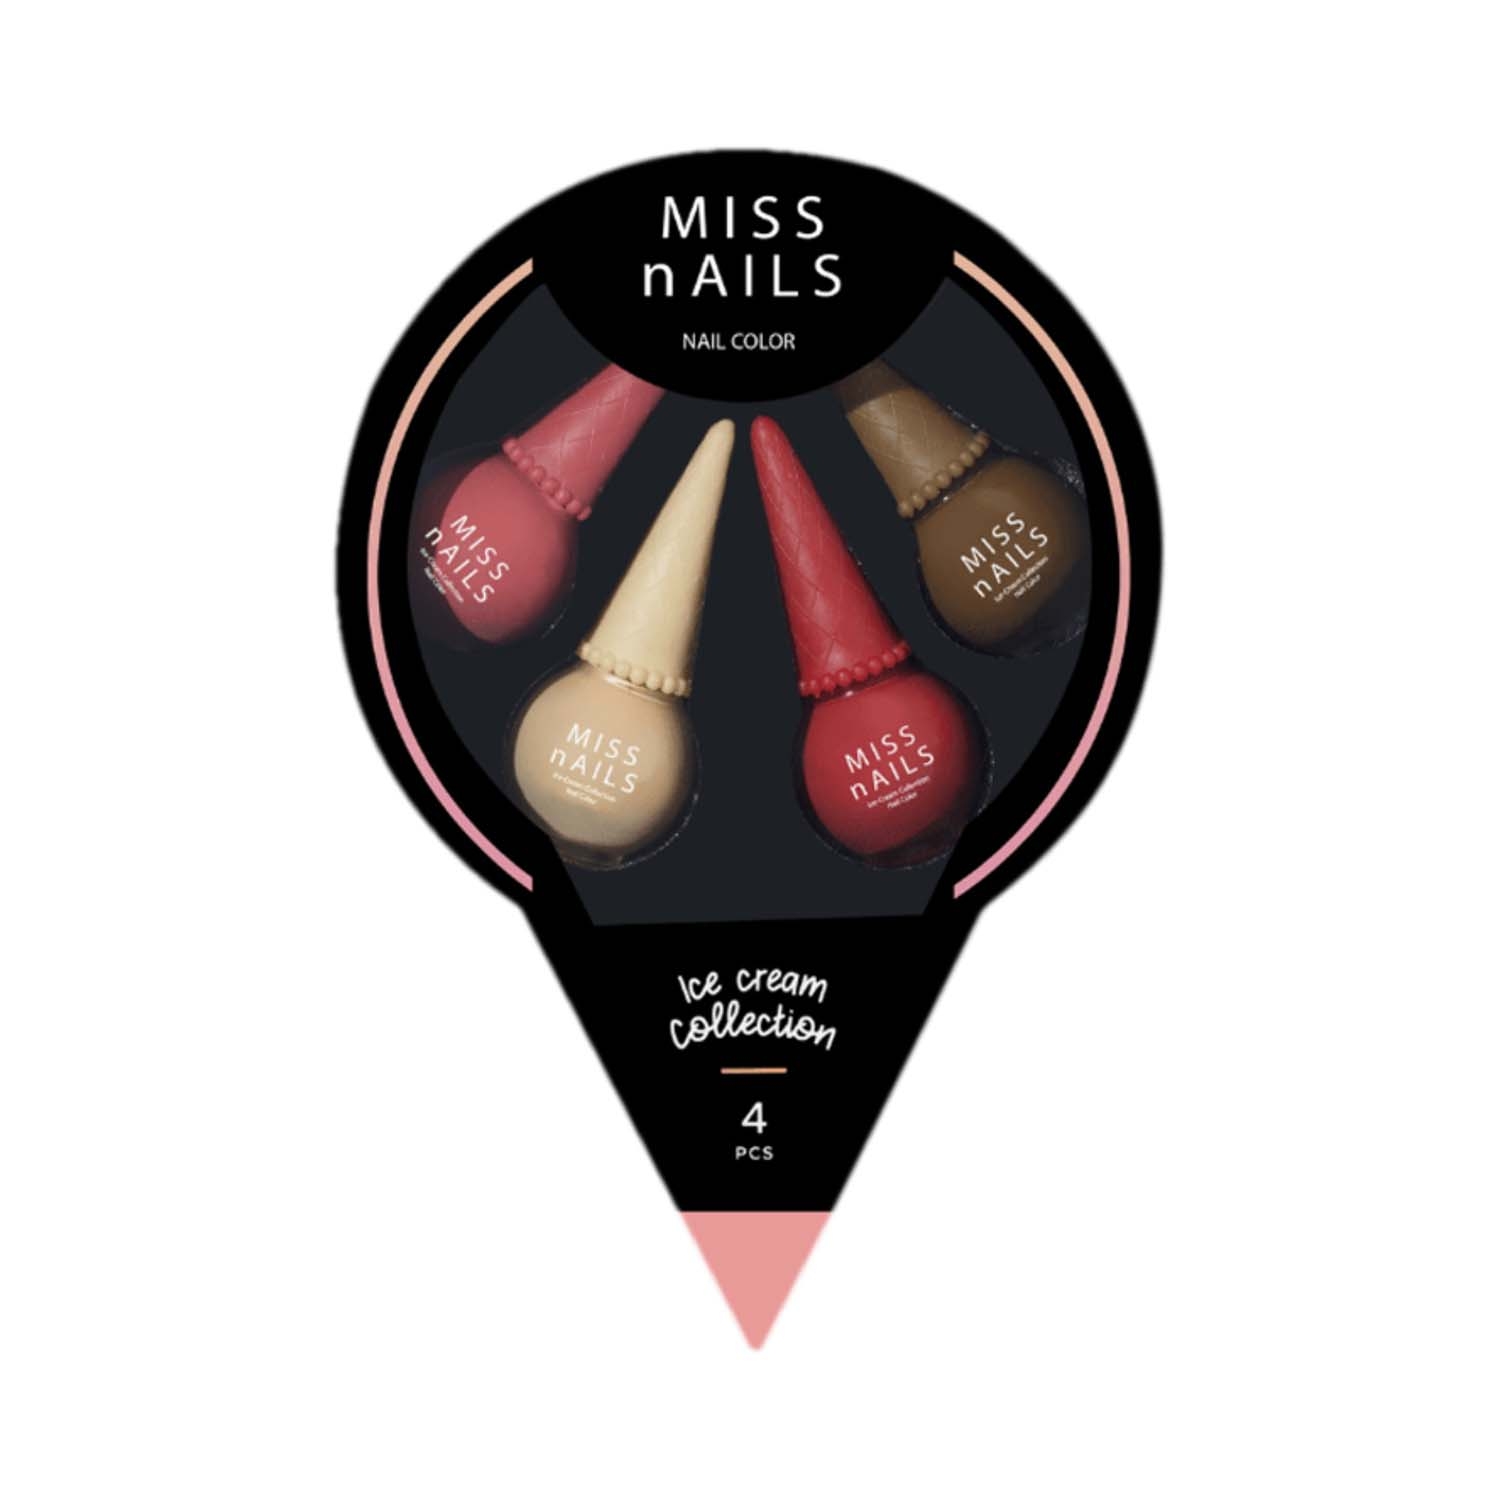 Miss Nails | Miss Nails Ice Cream Collection Nail Polish - Not So Matte (4 Pcs)